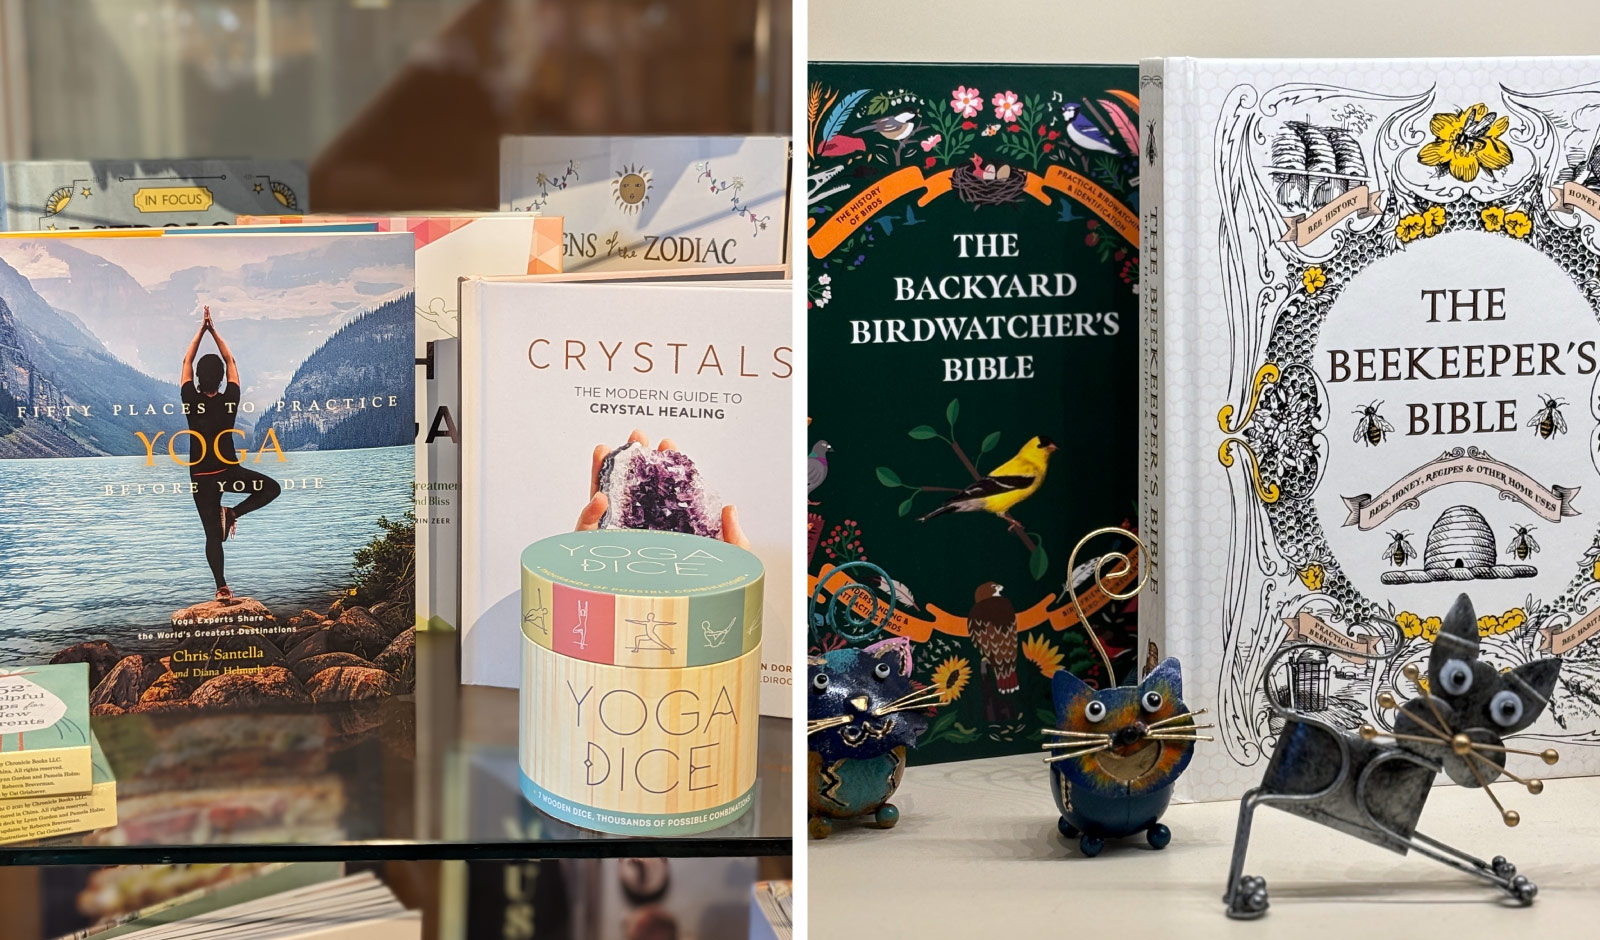 A collection of books on yoga and spirituality | A collection of books on birding